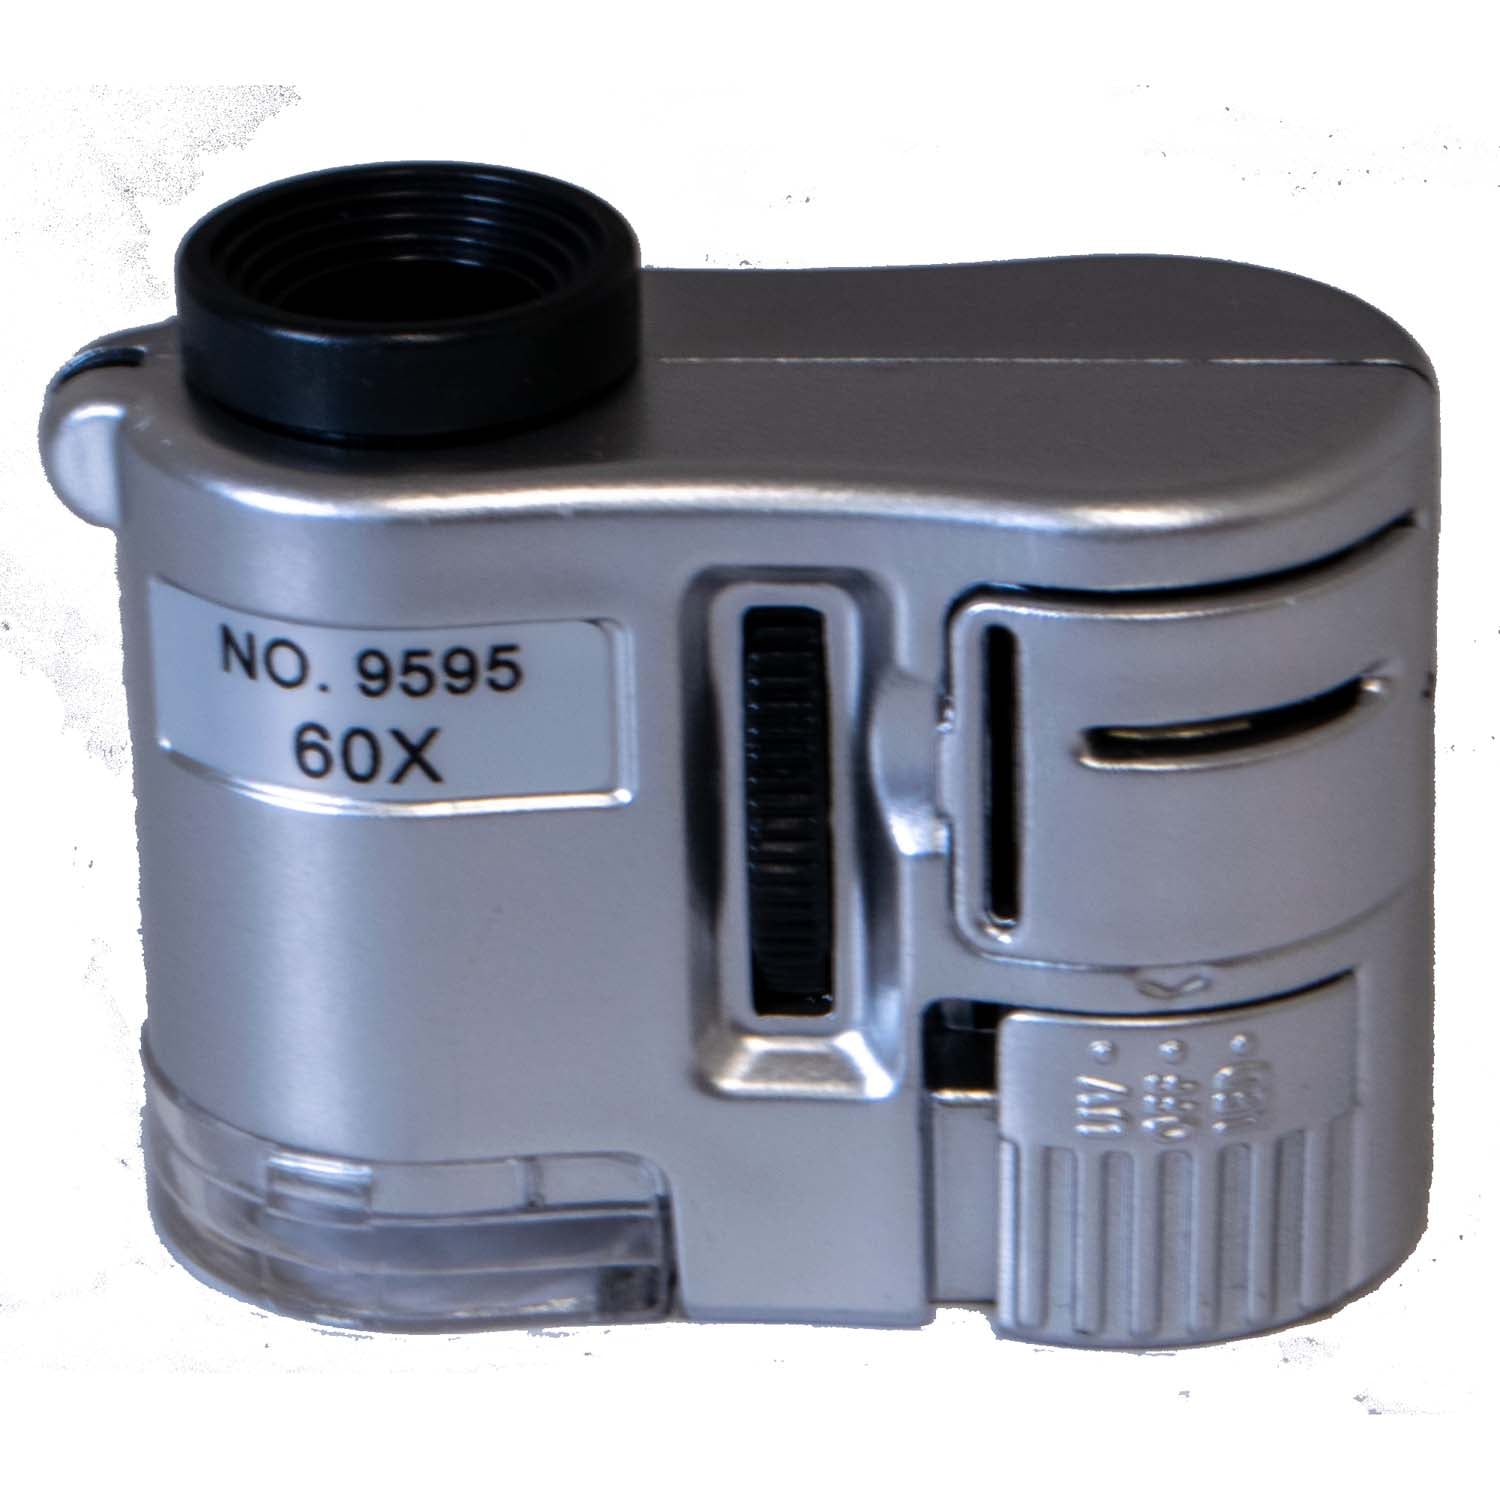 Pocket Microscope with light, 60X + UV light + free iPhone adaptor for iP5